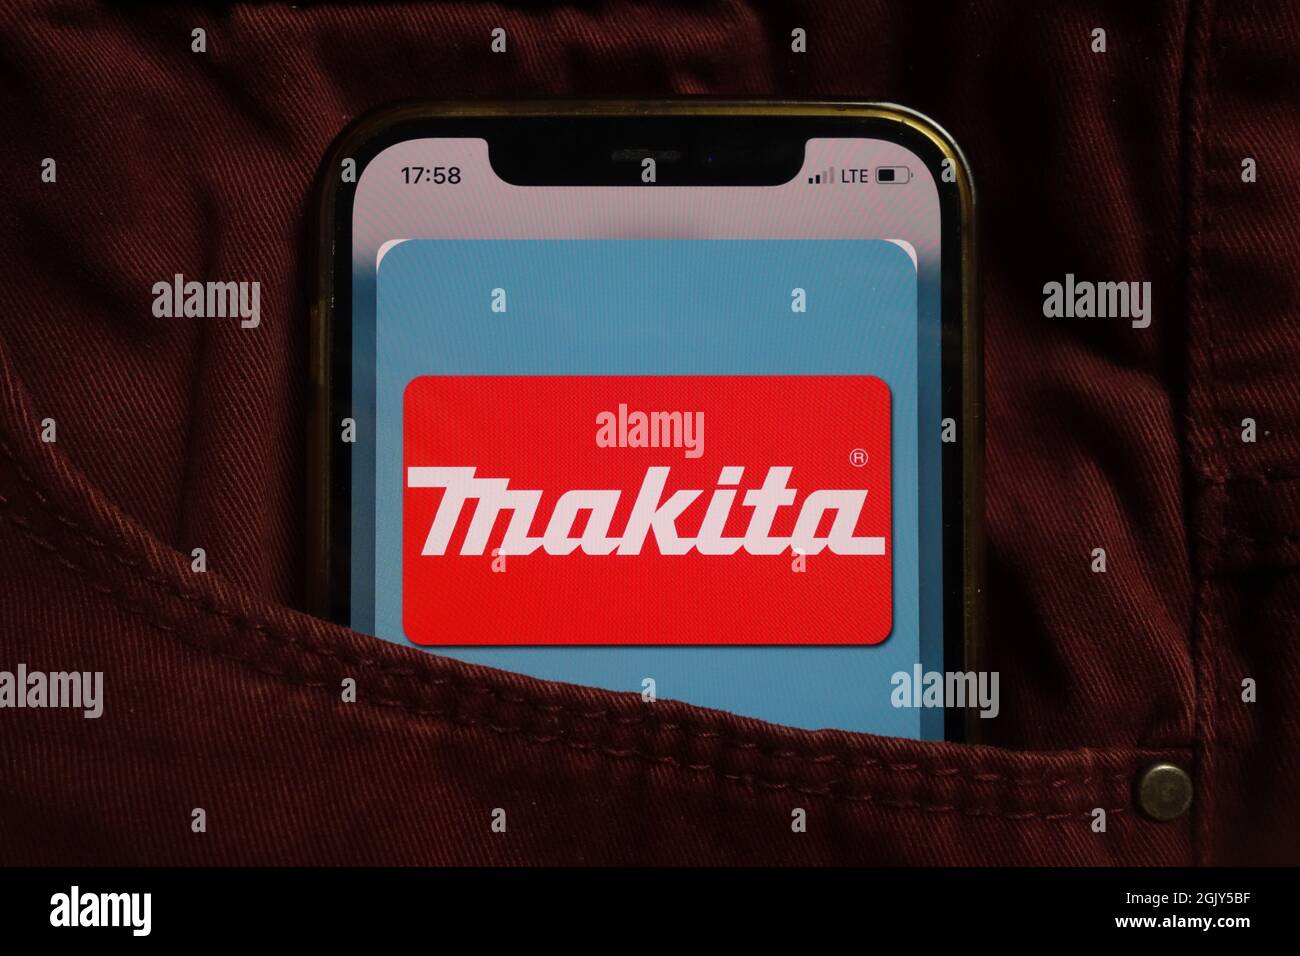 KONSKIE, POLAND - September 04, 2021: Makita Corporation logo displayed on mobile phone hidden in jeans pocket Stock Photo